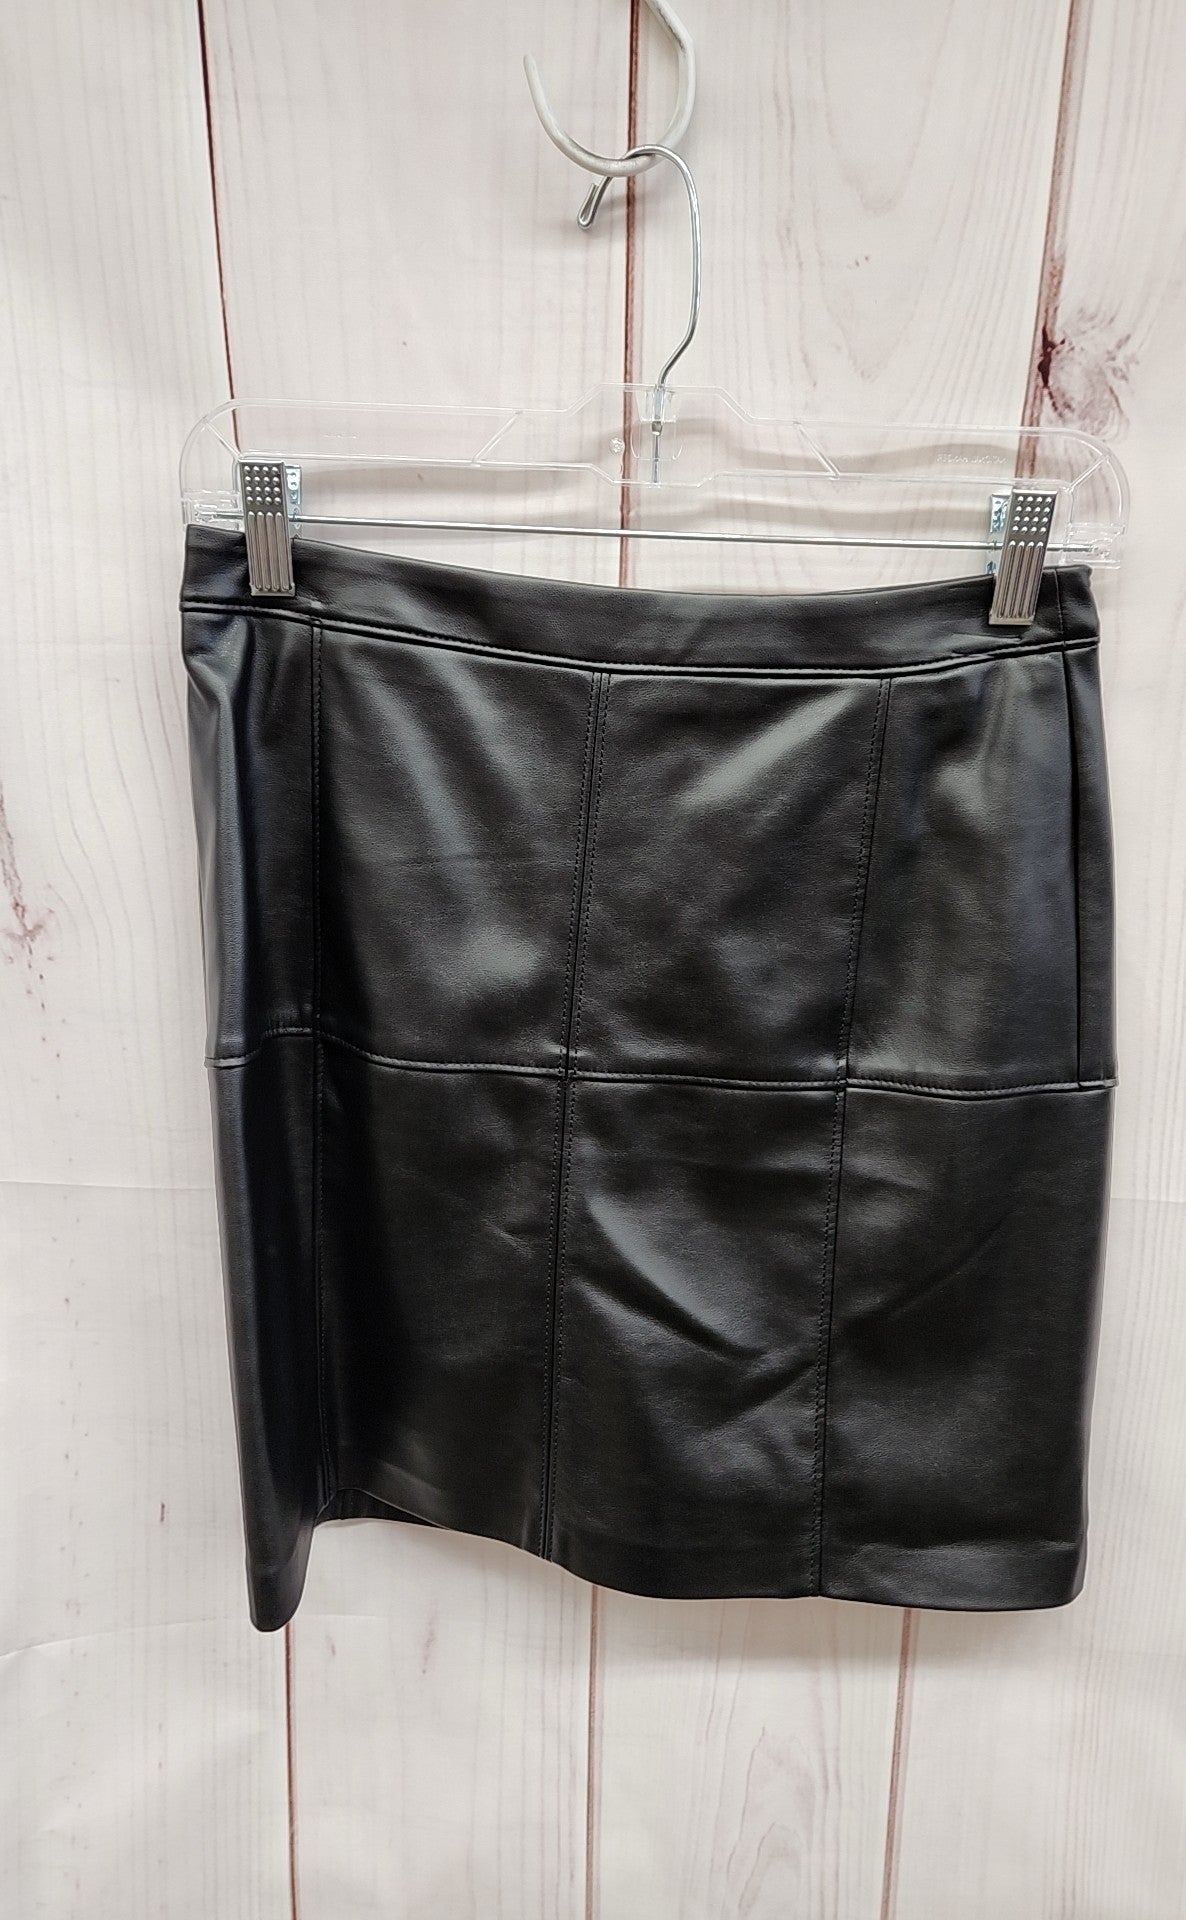 White House Black Market Women's Size 0 Black Faux Leather Skirt